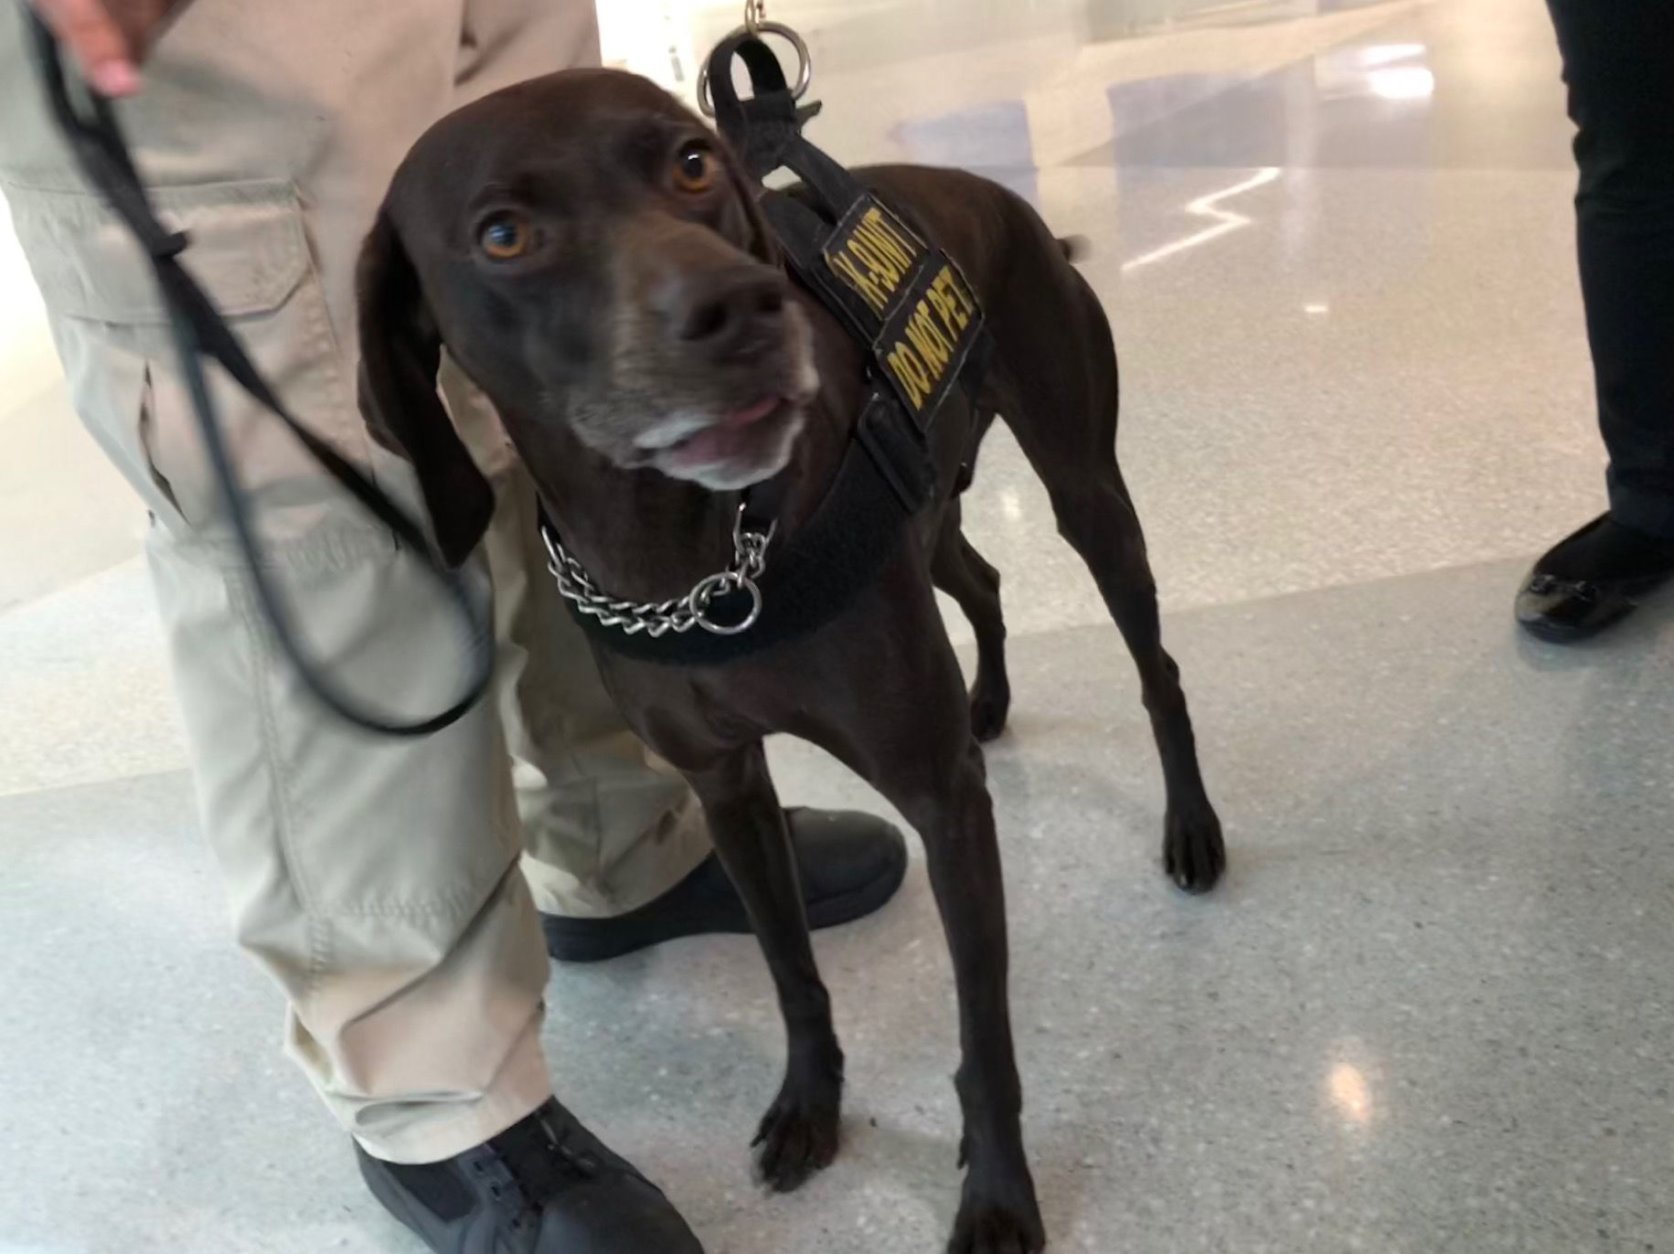 “She has no idea what she’s really doing, and we like to keep it that way,” handler Brandon Owens said of TSA dog Dafi. (WTOP/John Aaron)